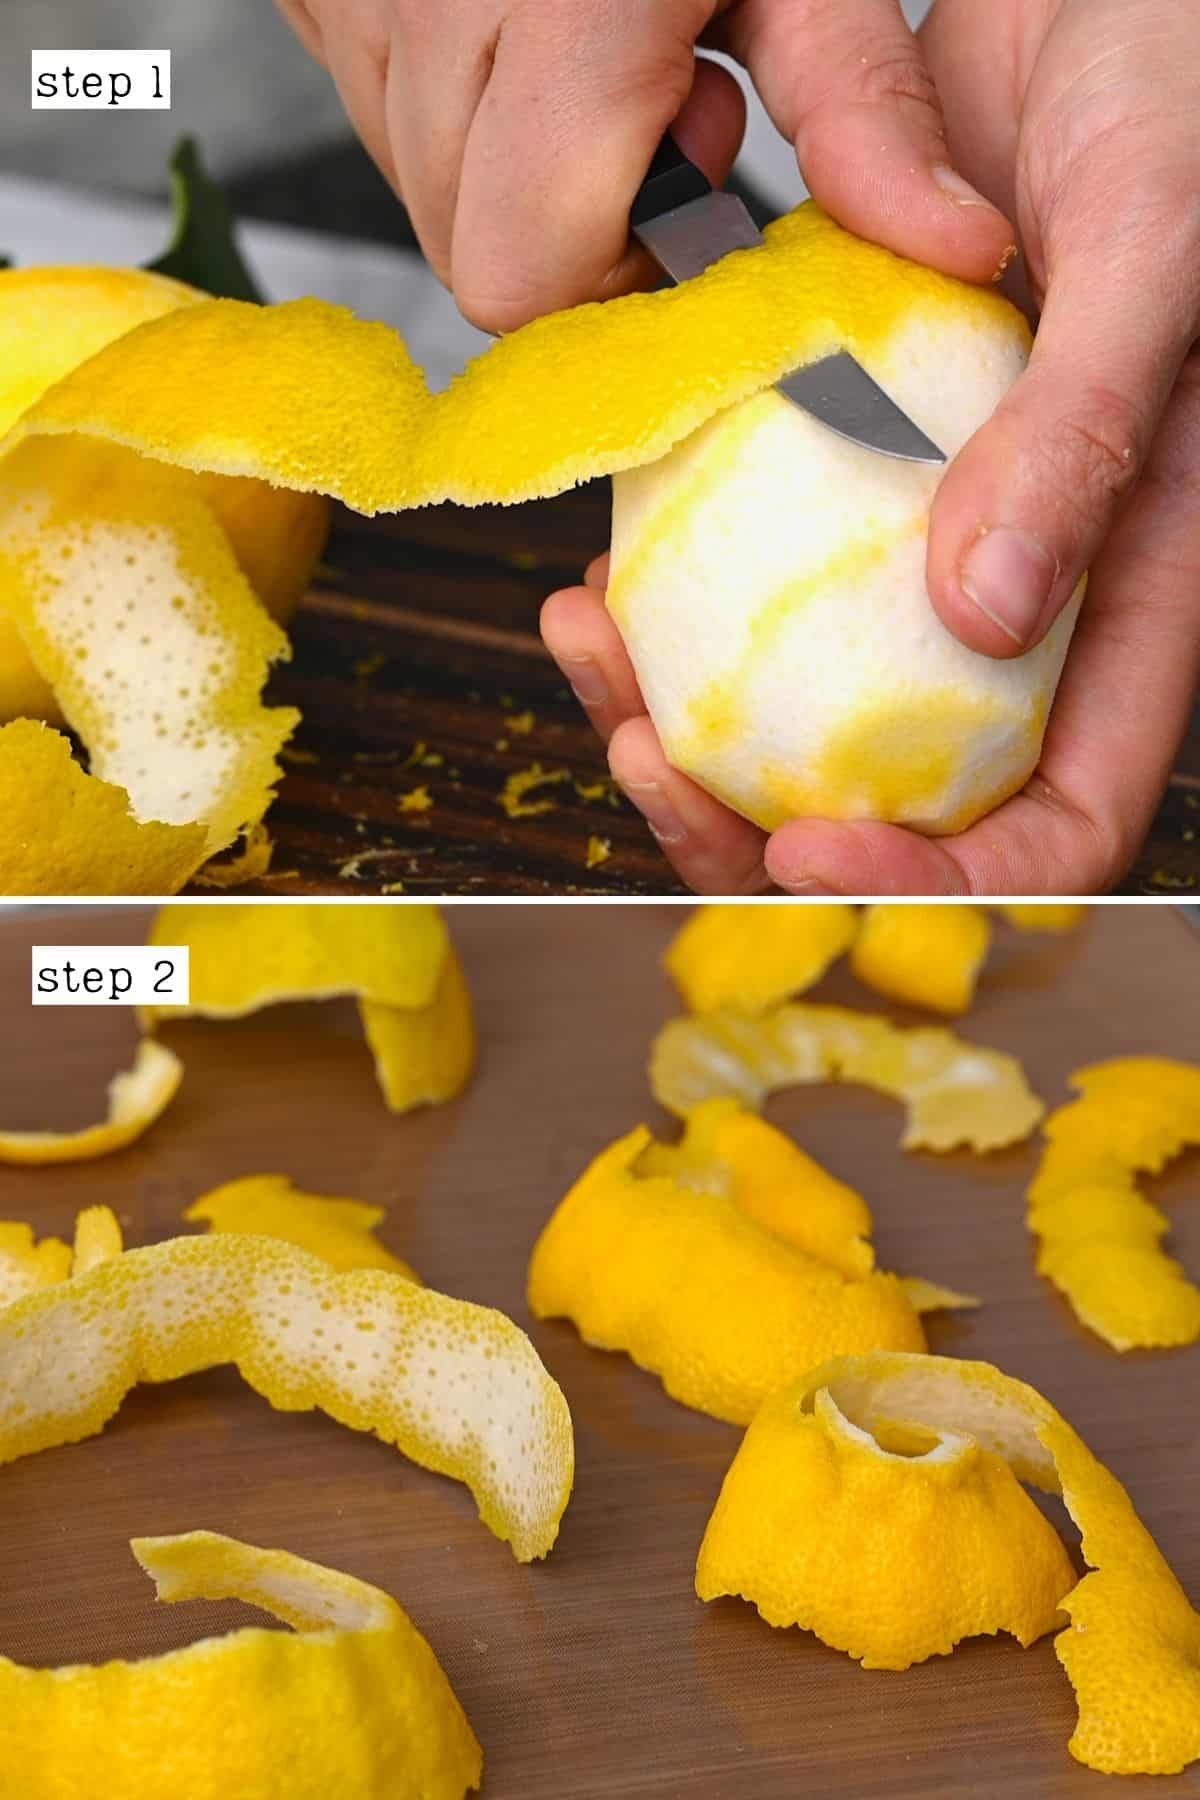 Steps for peeling a lemon with a knife